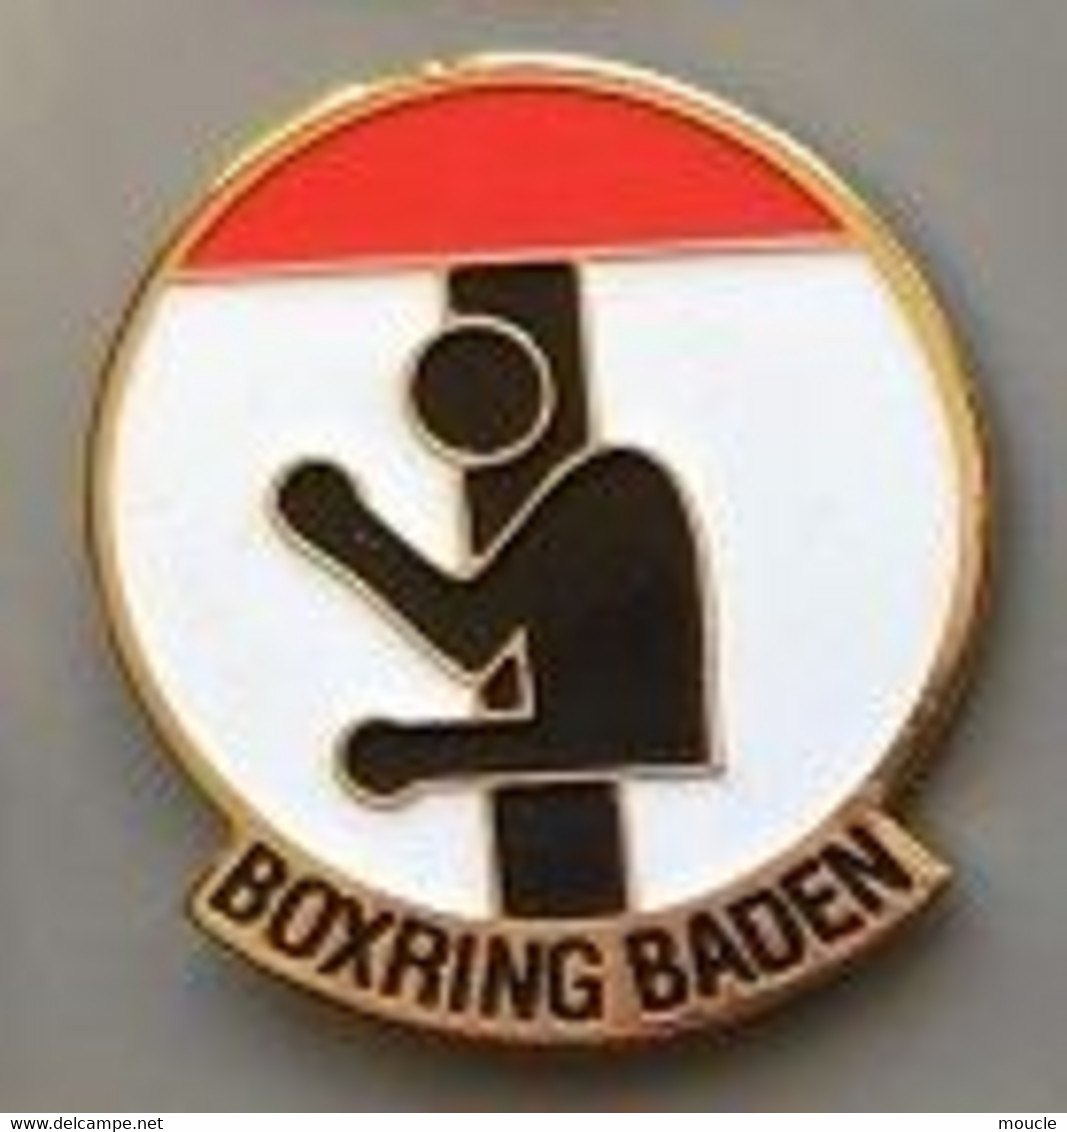 BOXRING BADEN - SCHWEIZ - BOXING CLUB - SUISSE - BOXEUR - GANTS - RING - SWITZERLAND - SVIZZERA - BOXING - BOXEN - (30) - Boxing